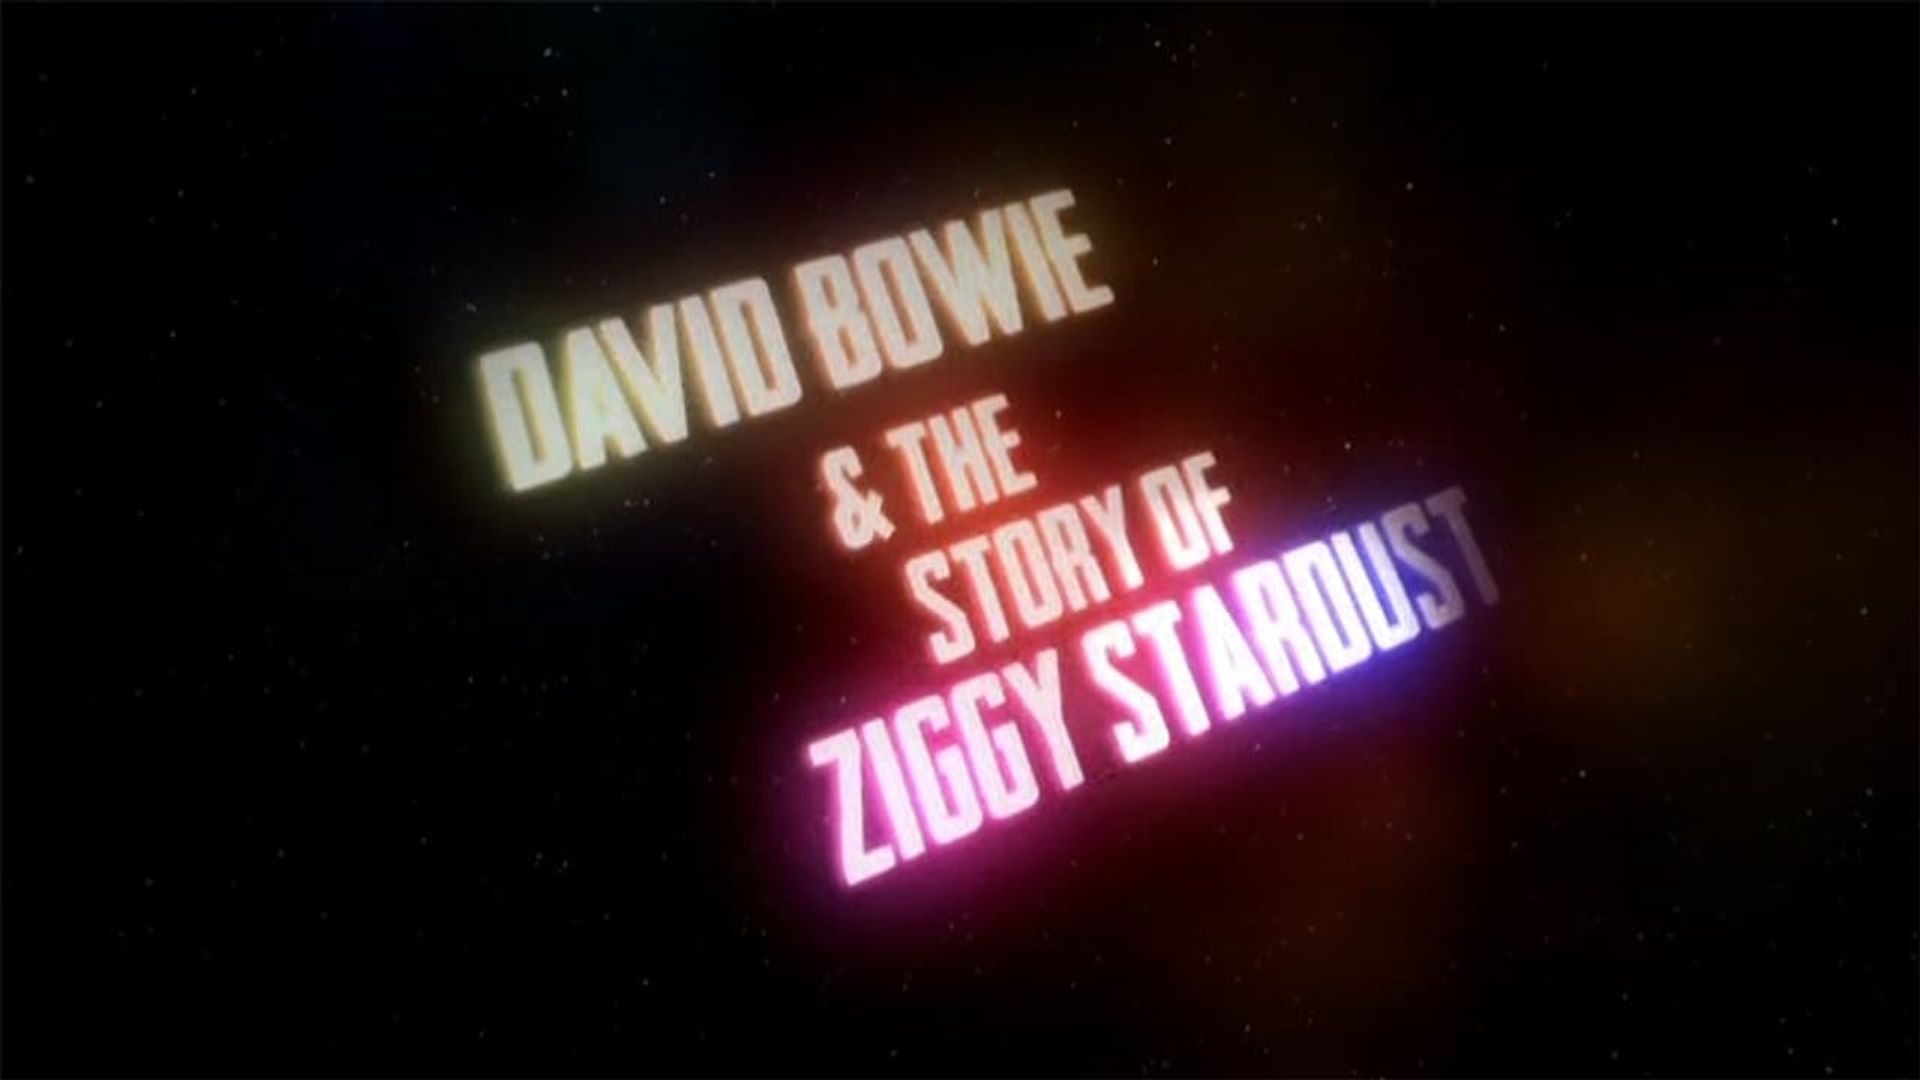 David Bowie & the Story of Ziggy Stardust background